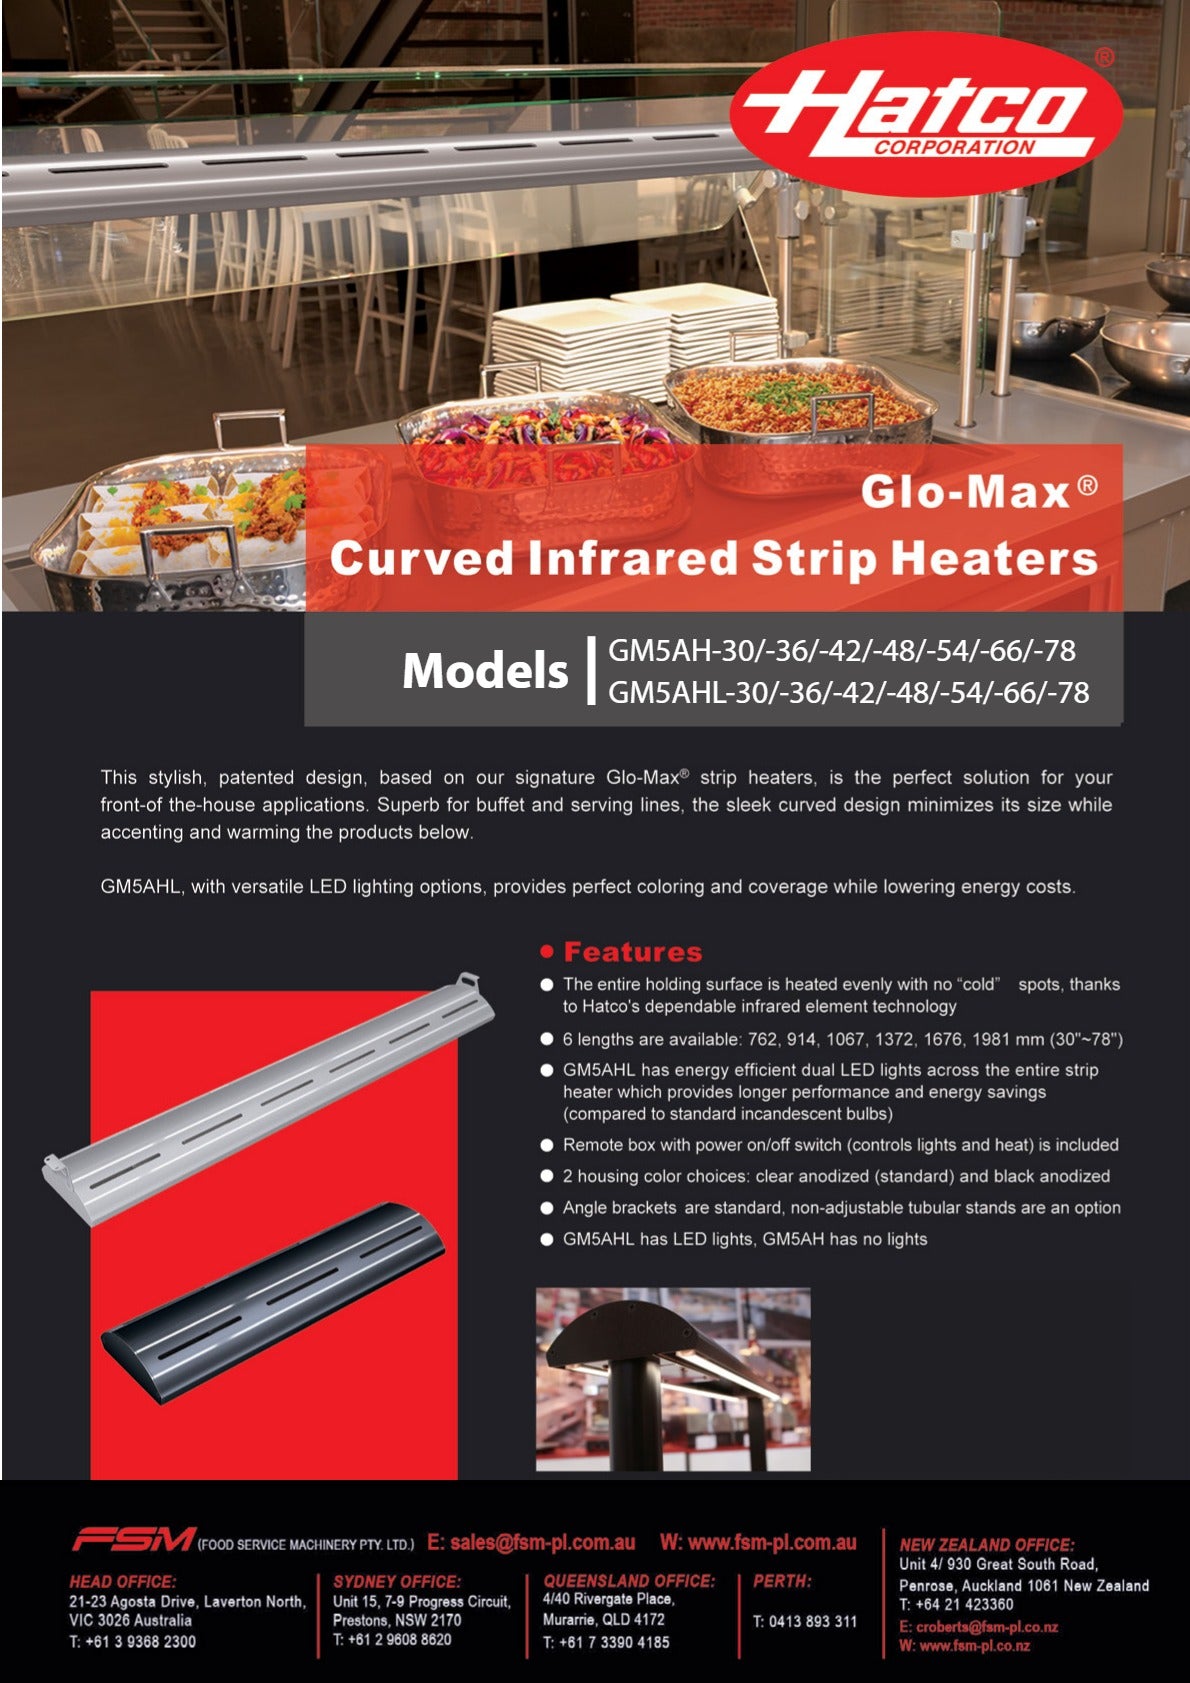 Thumbnail - Hatco Glo-Max M5AH-54 - Infrared Strip Heater